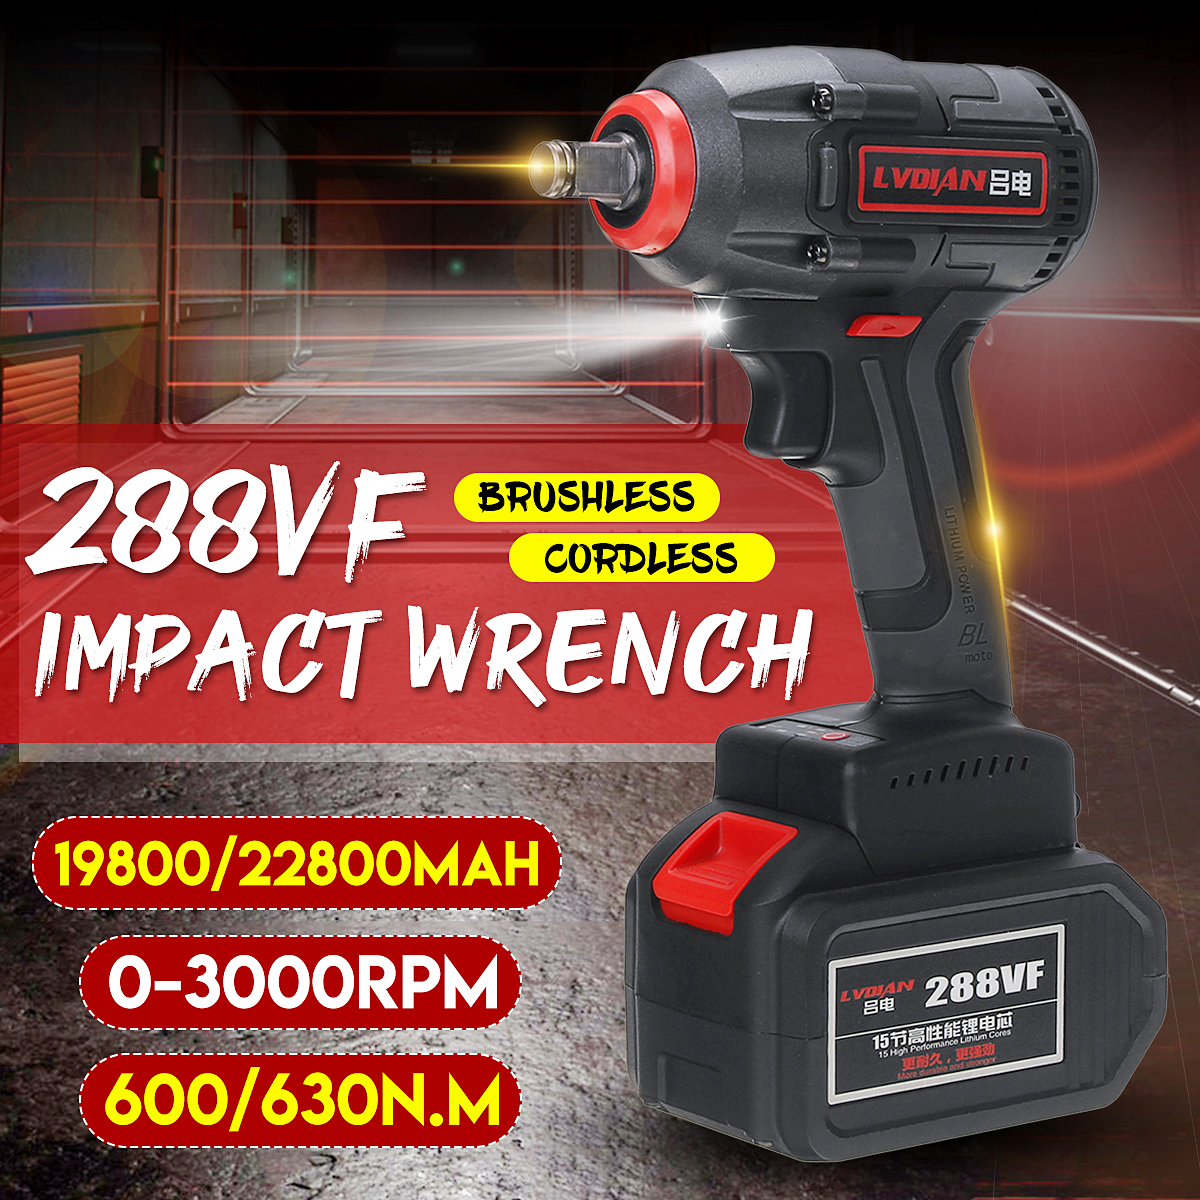 288VF-19800mAh22800mAh-Cordless-Electric-Impact-Wrench-Brushless-Motor-Drill-Driver-1596239-1